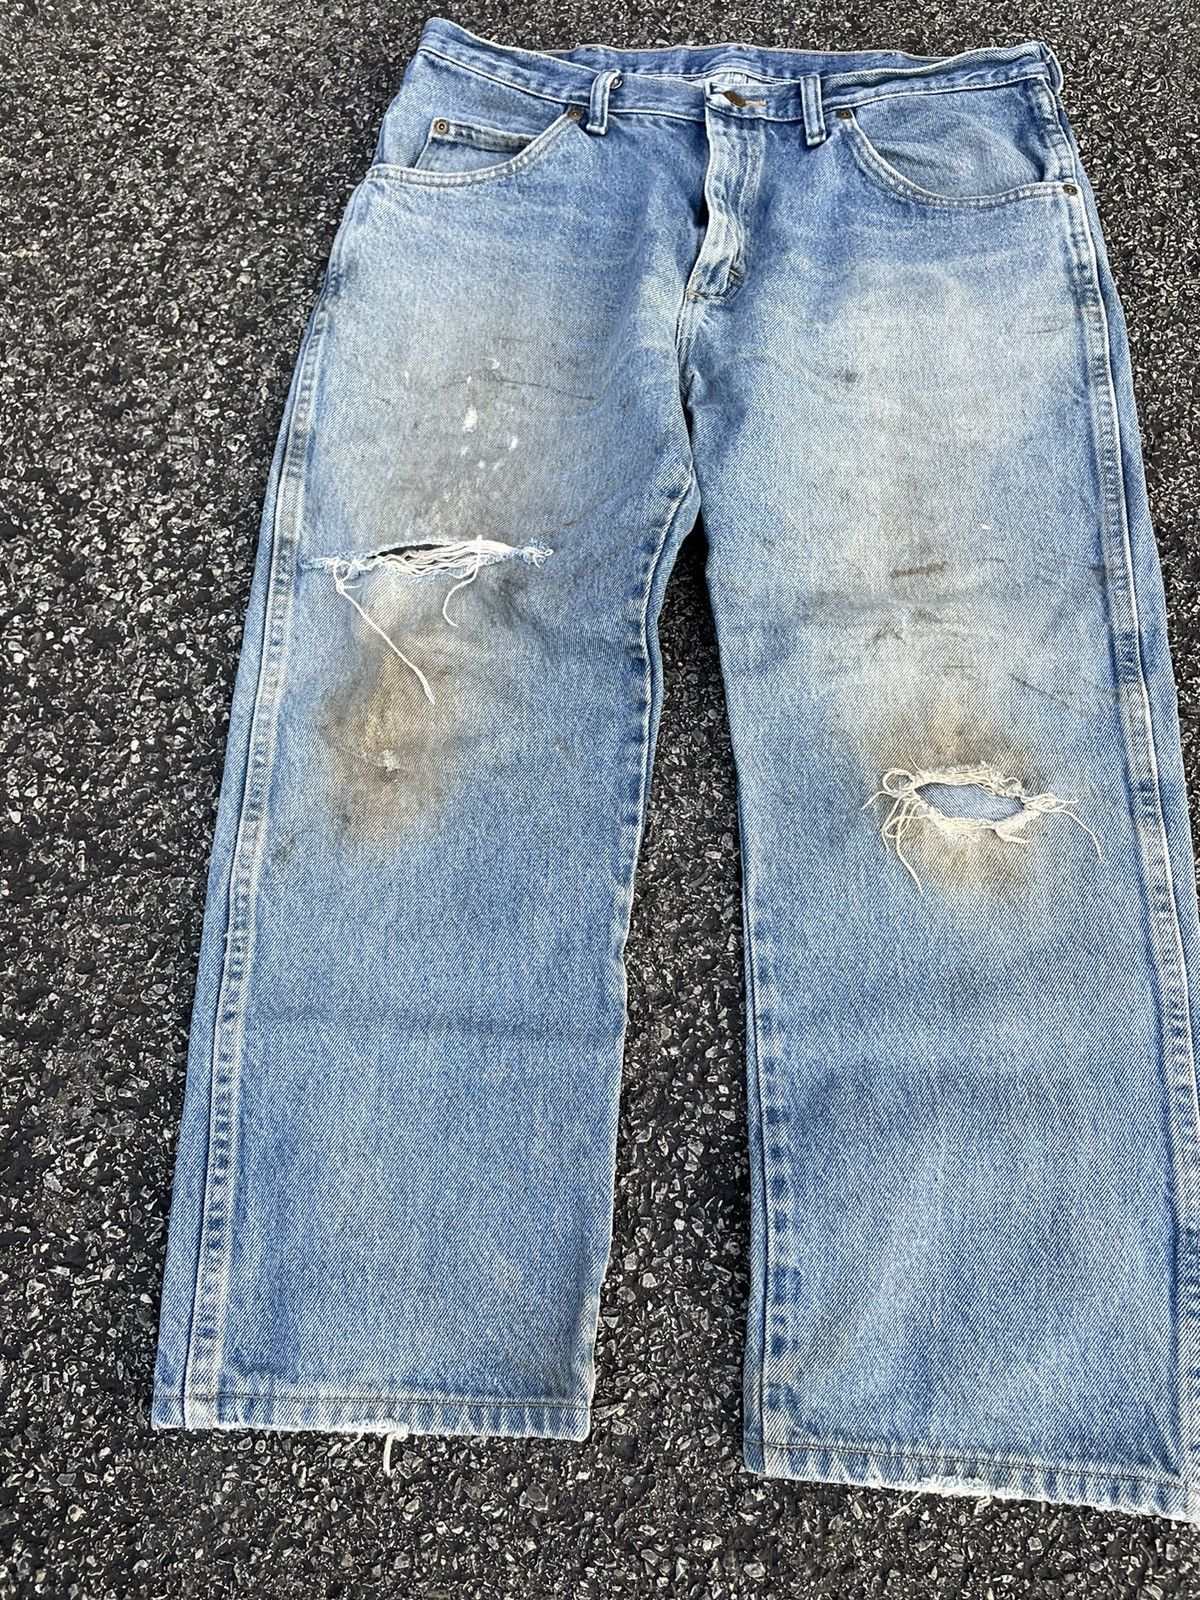 Wrangler Vintage wrangler distressed light wash jeans Size US 34 / EU 50 - 3 Thumbnail